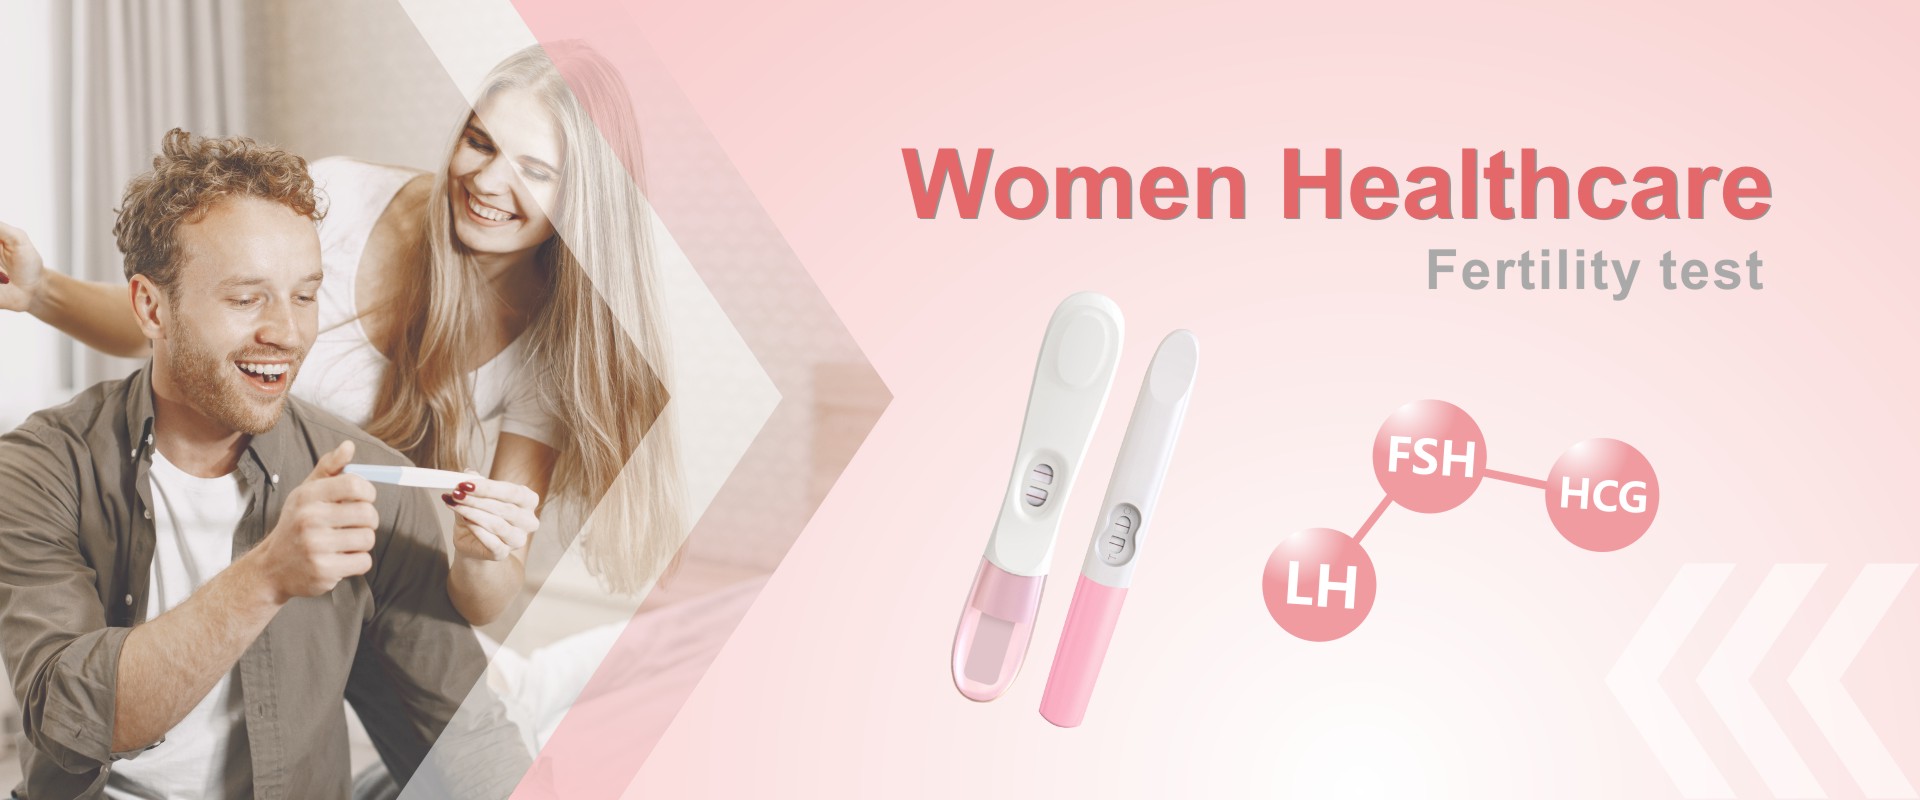 https://www.sejoy.com/convention-fertility-testing-system-hcg-pregnancy-rapid-test-product/